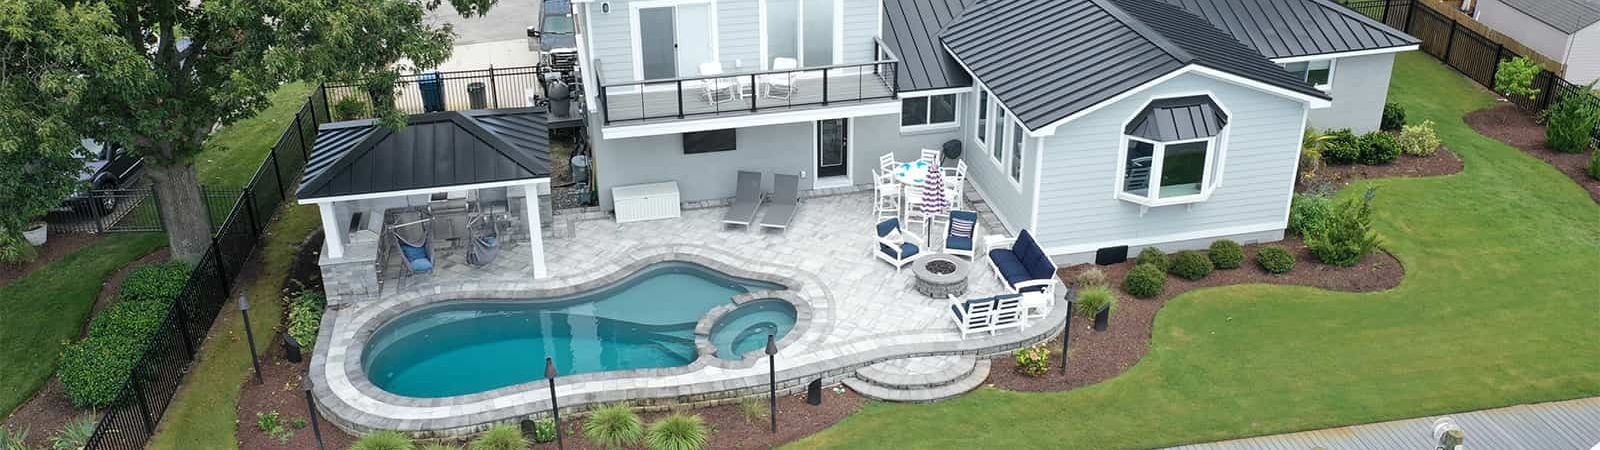 House with fiberglass pool and hardscape design